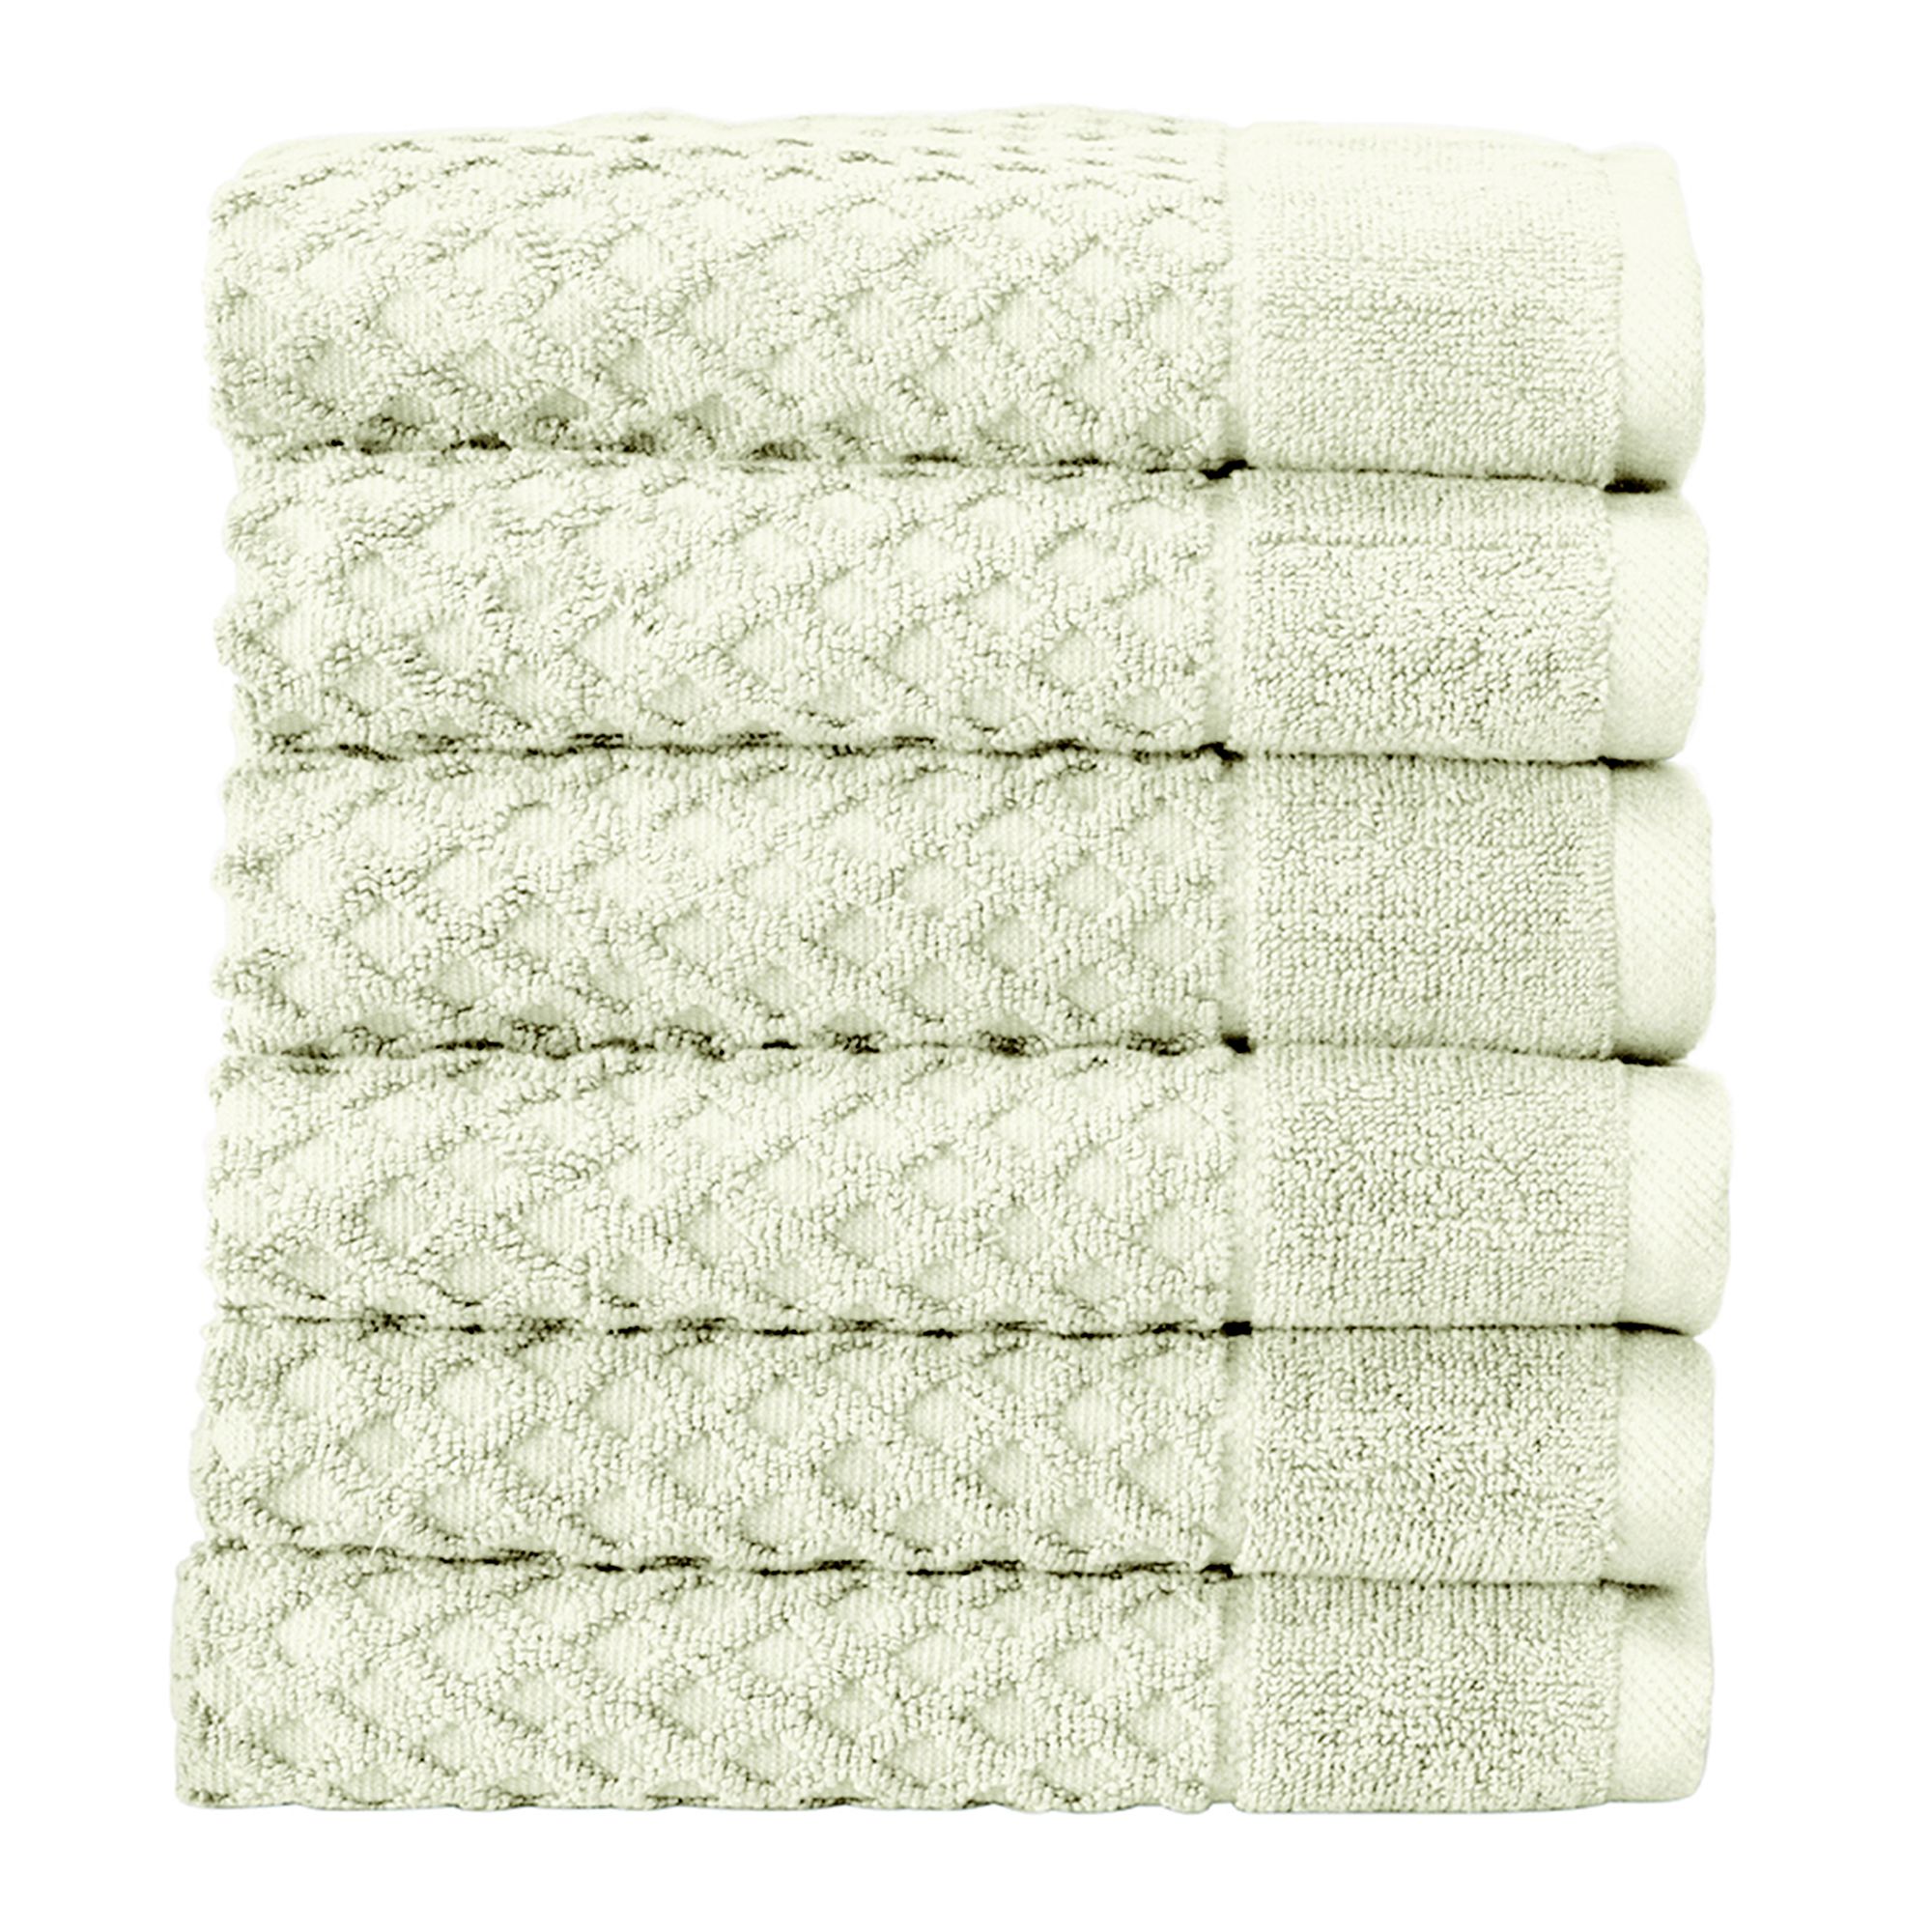 FRESHFOLDS Gray Solid 100% Cotton Textured Bath Towel (Set of 4